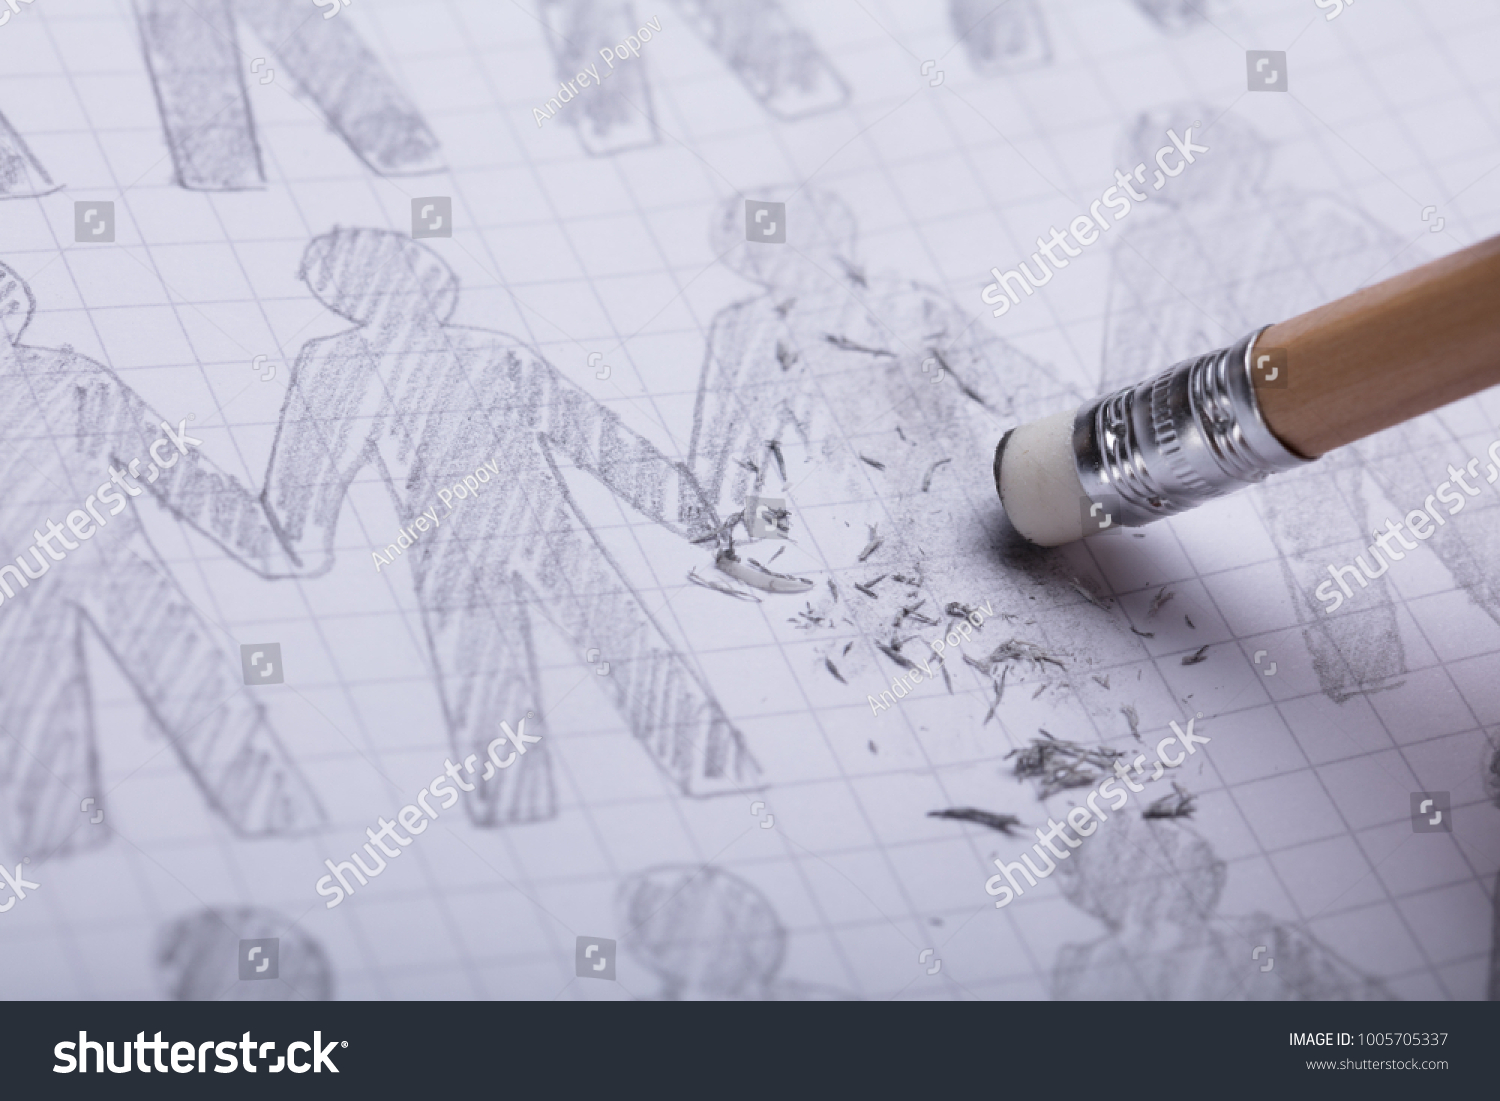 Close-up Of Pencil Eraser Erasing Drawn Figures On Paper #1005705337